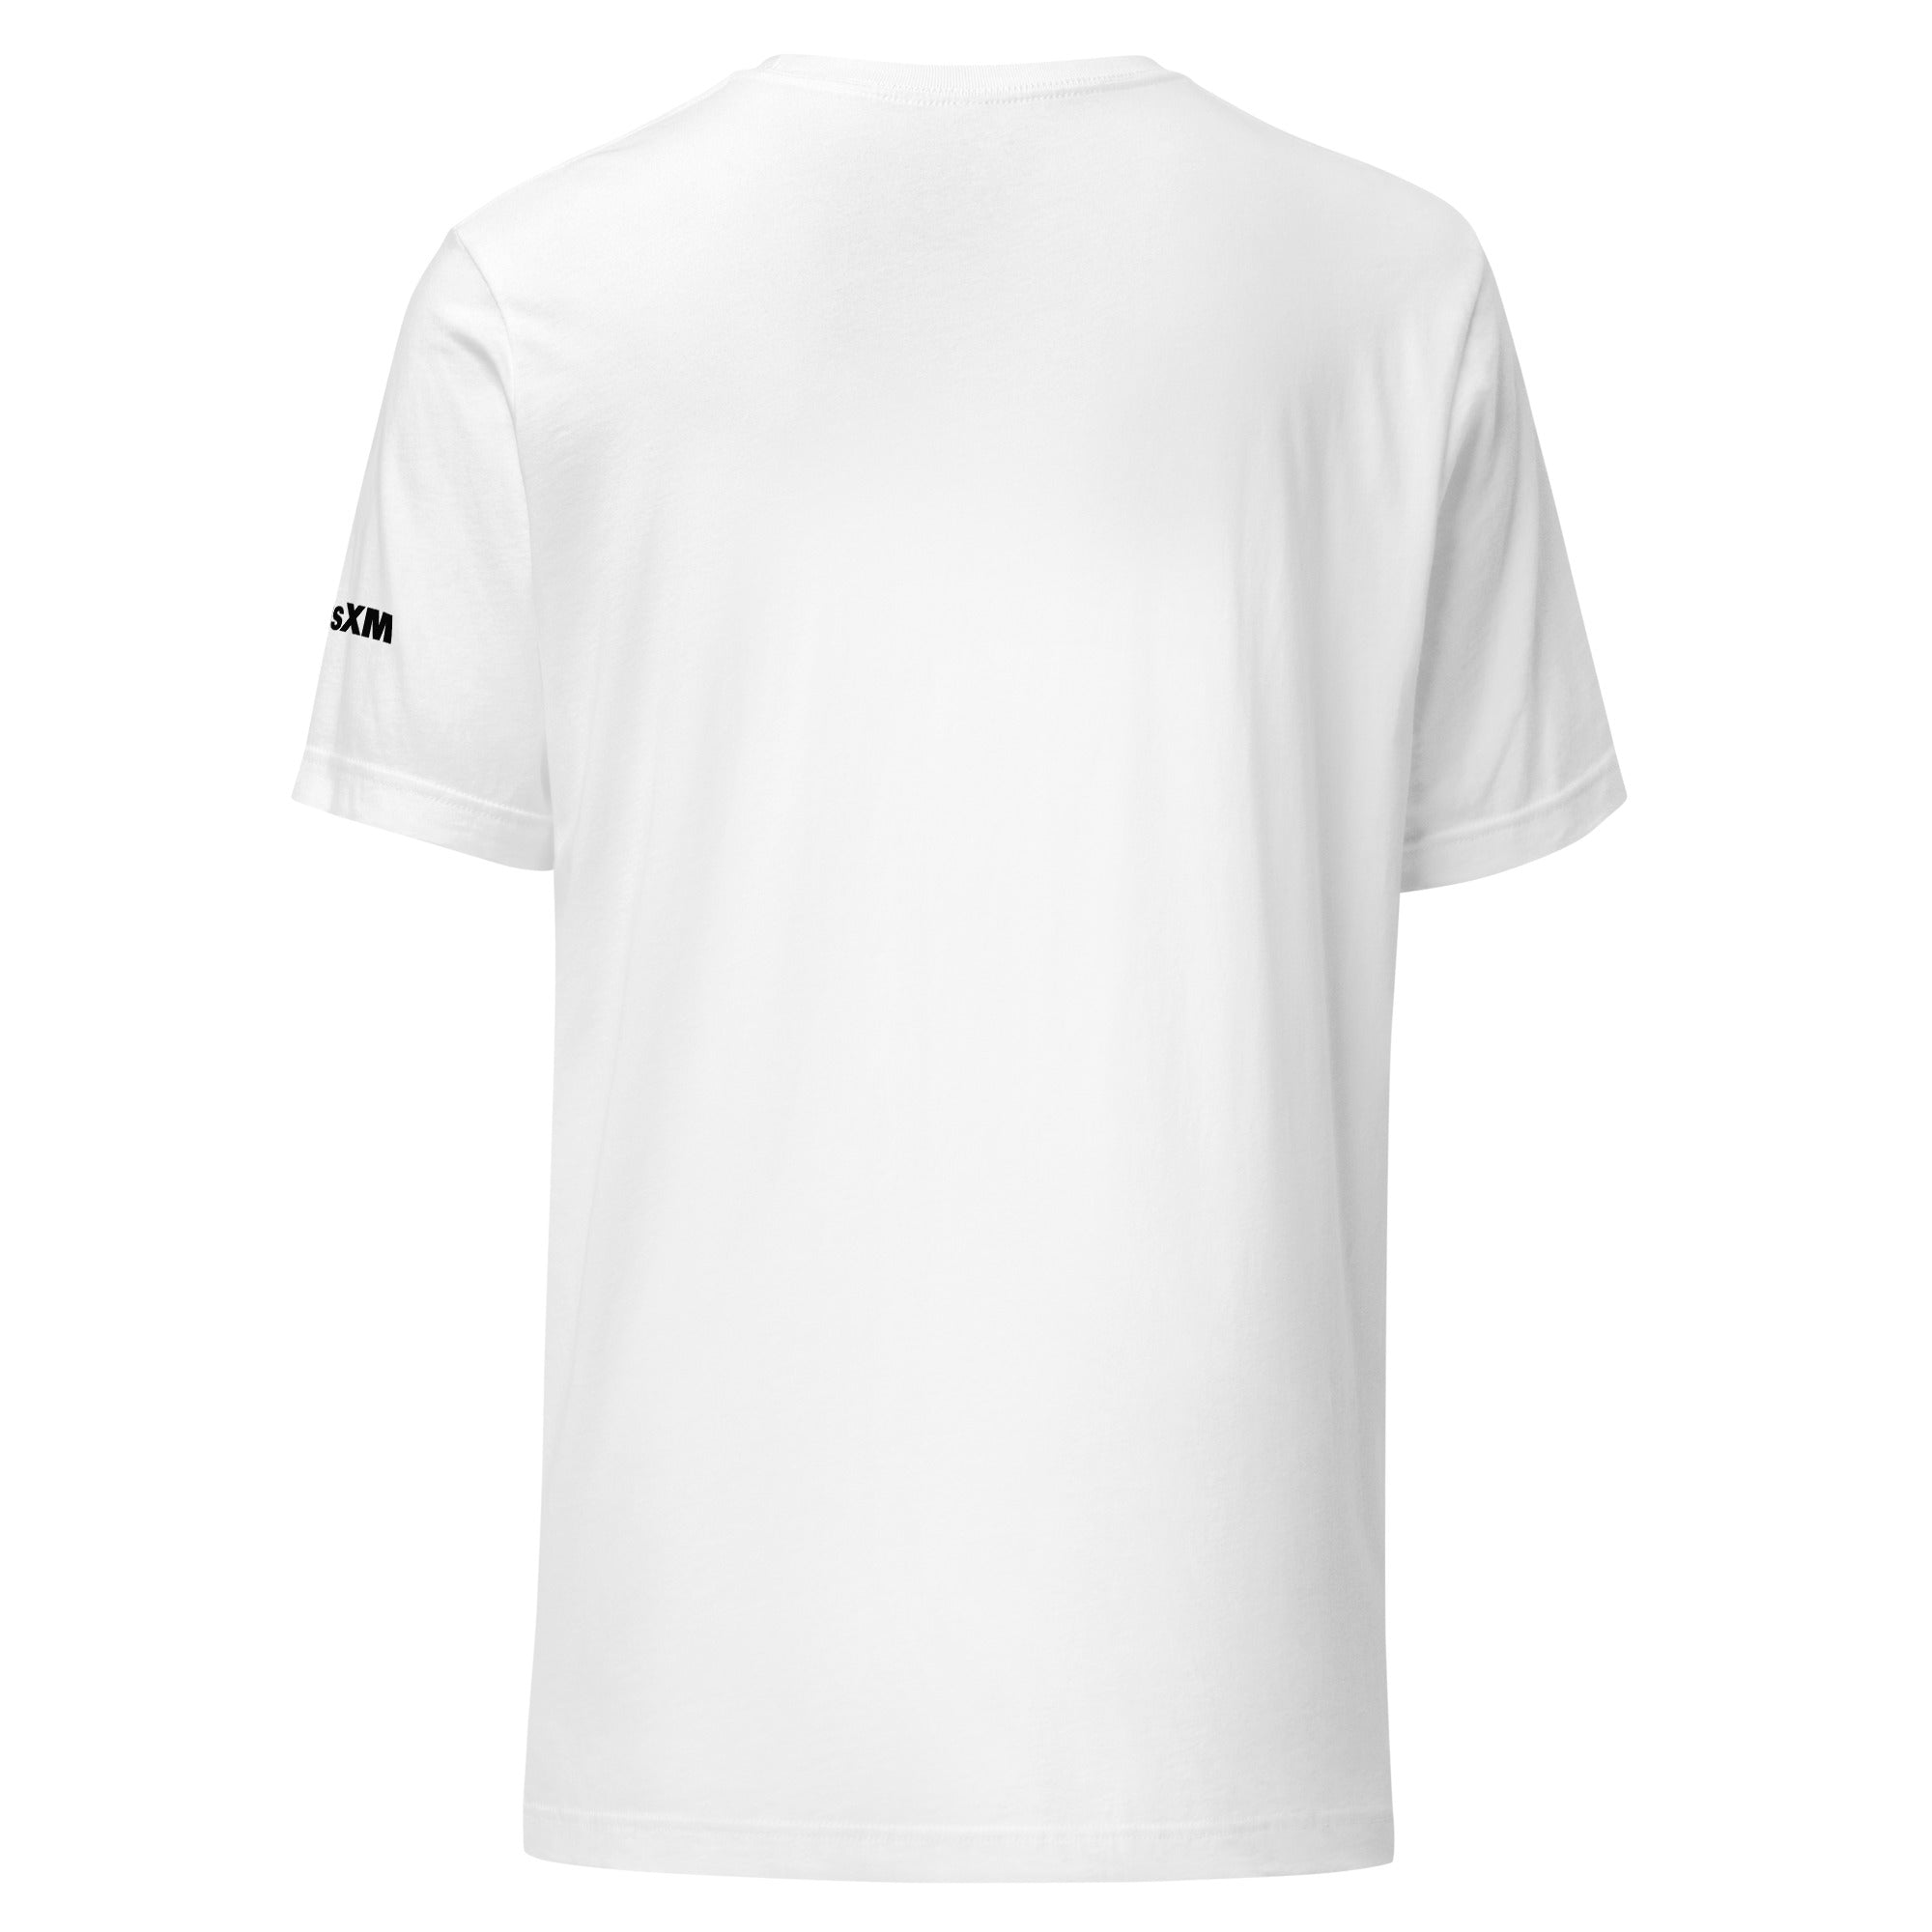 SiriusXM Pops: T-shirt (White)